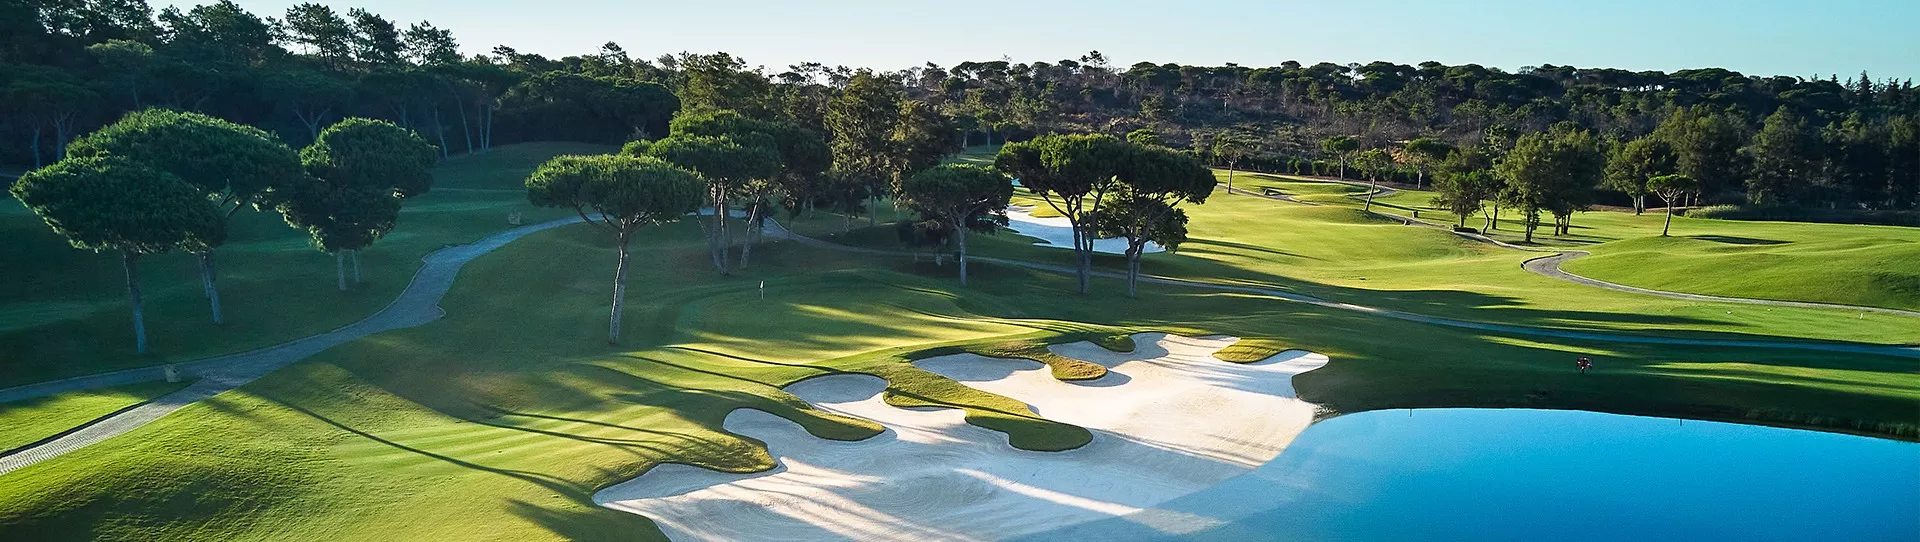 Portugal golf courses - Laranjal Golf Course - Photo 1